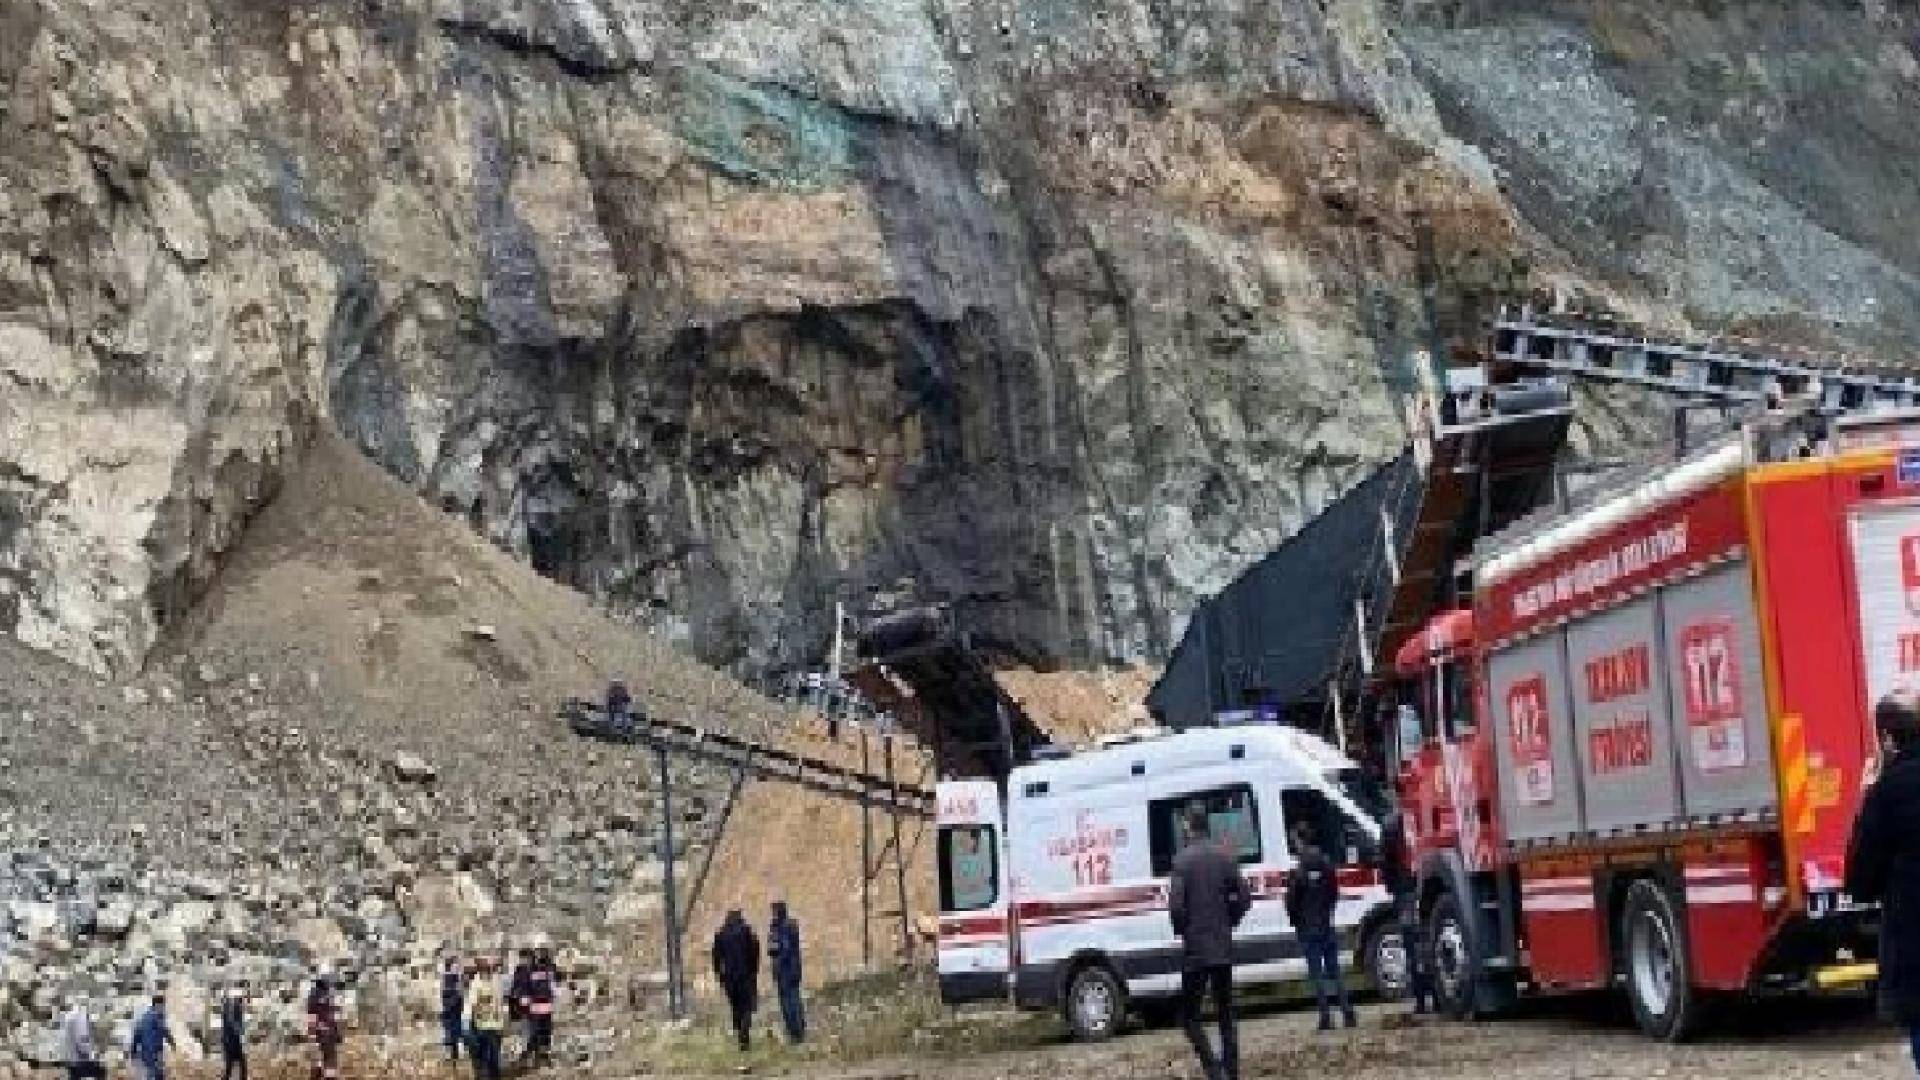 Trabzon’da taş ocağında çalışan 46 yaşındaki işçi yaşamını kaybetti